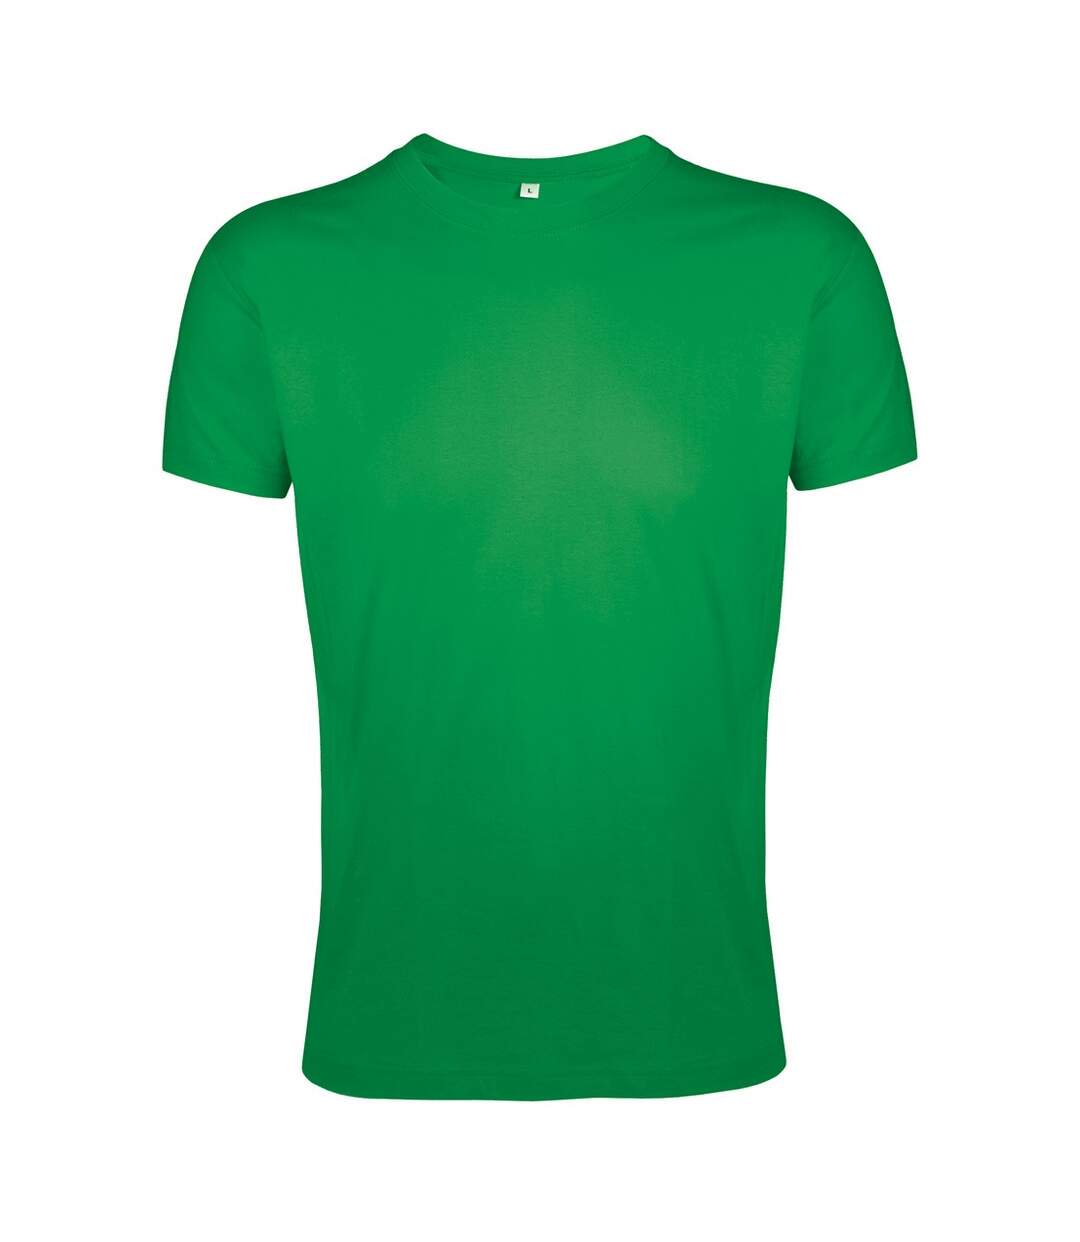 SOLS - T-shirt REGENT - Homme (Vert) - UTPC506